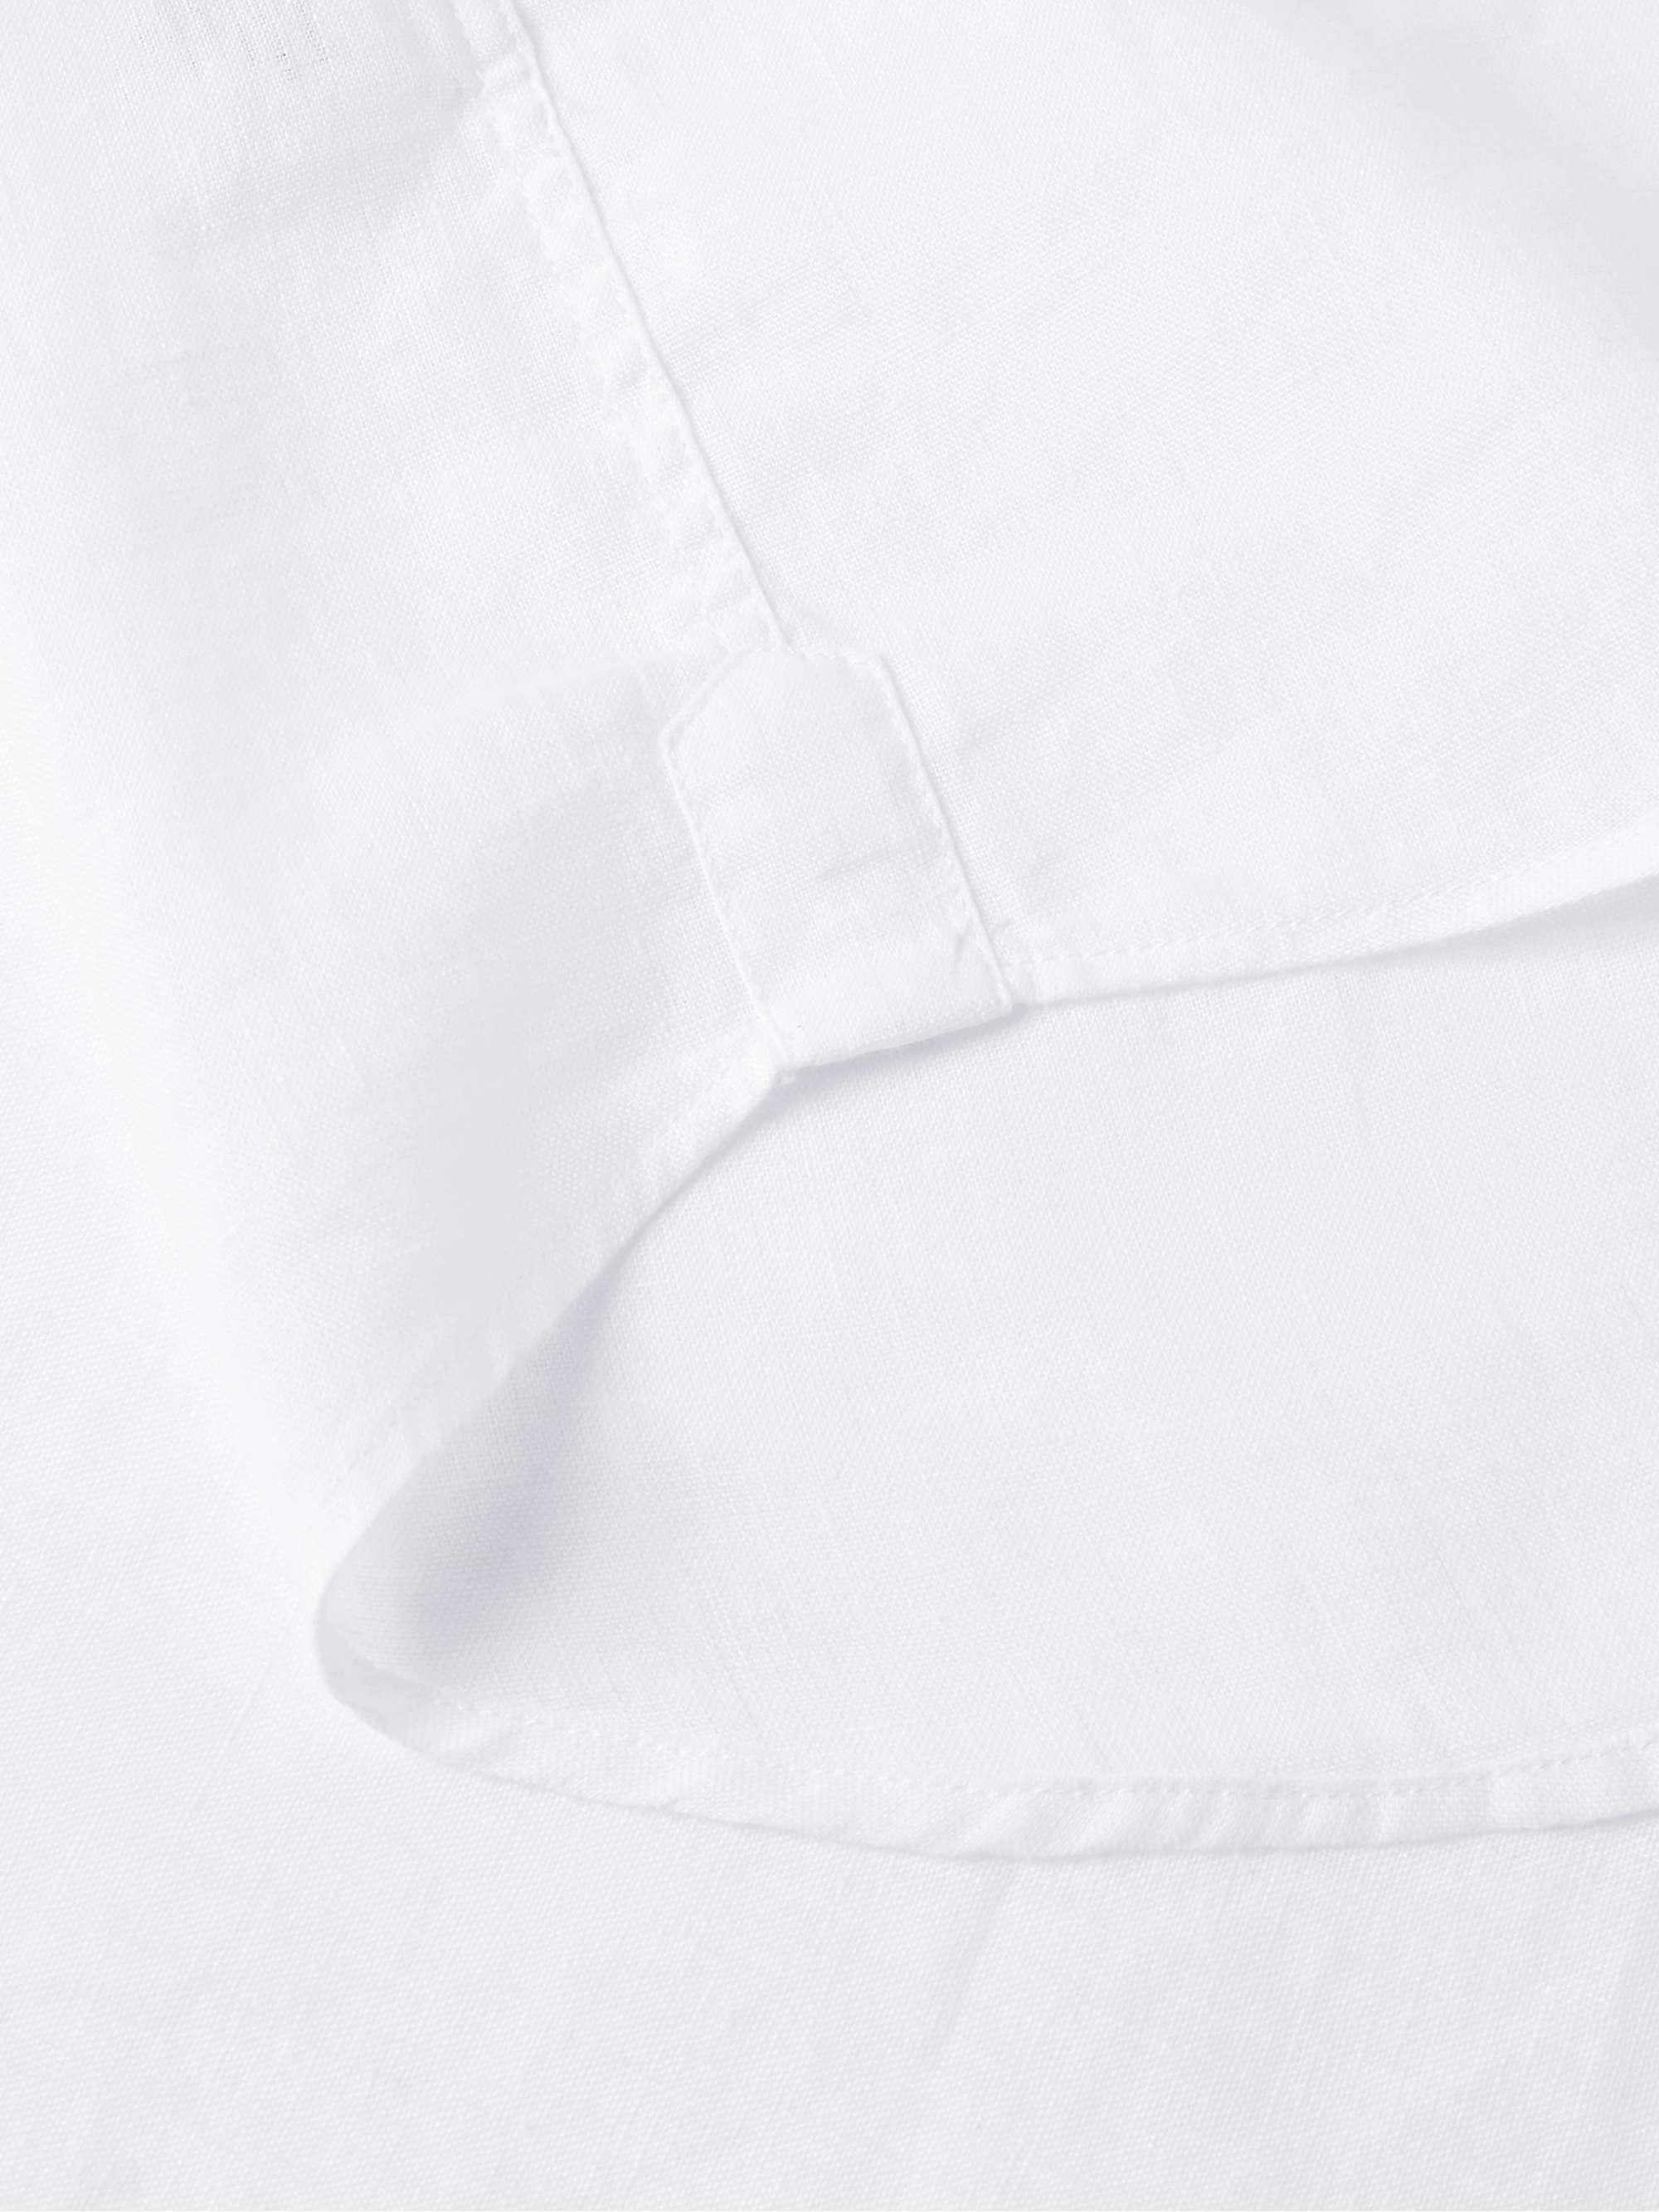 FRESCOBOL CARIOCA Linen Shirt